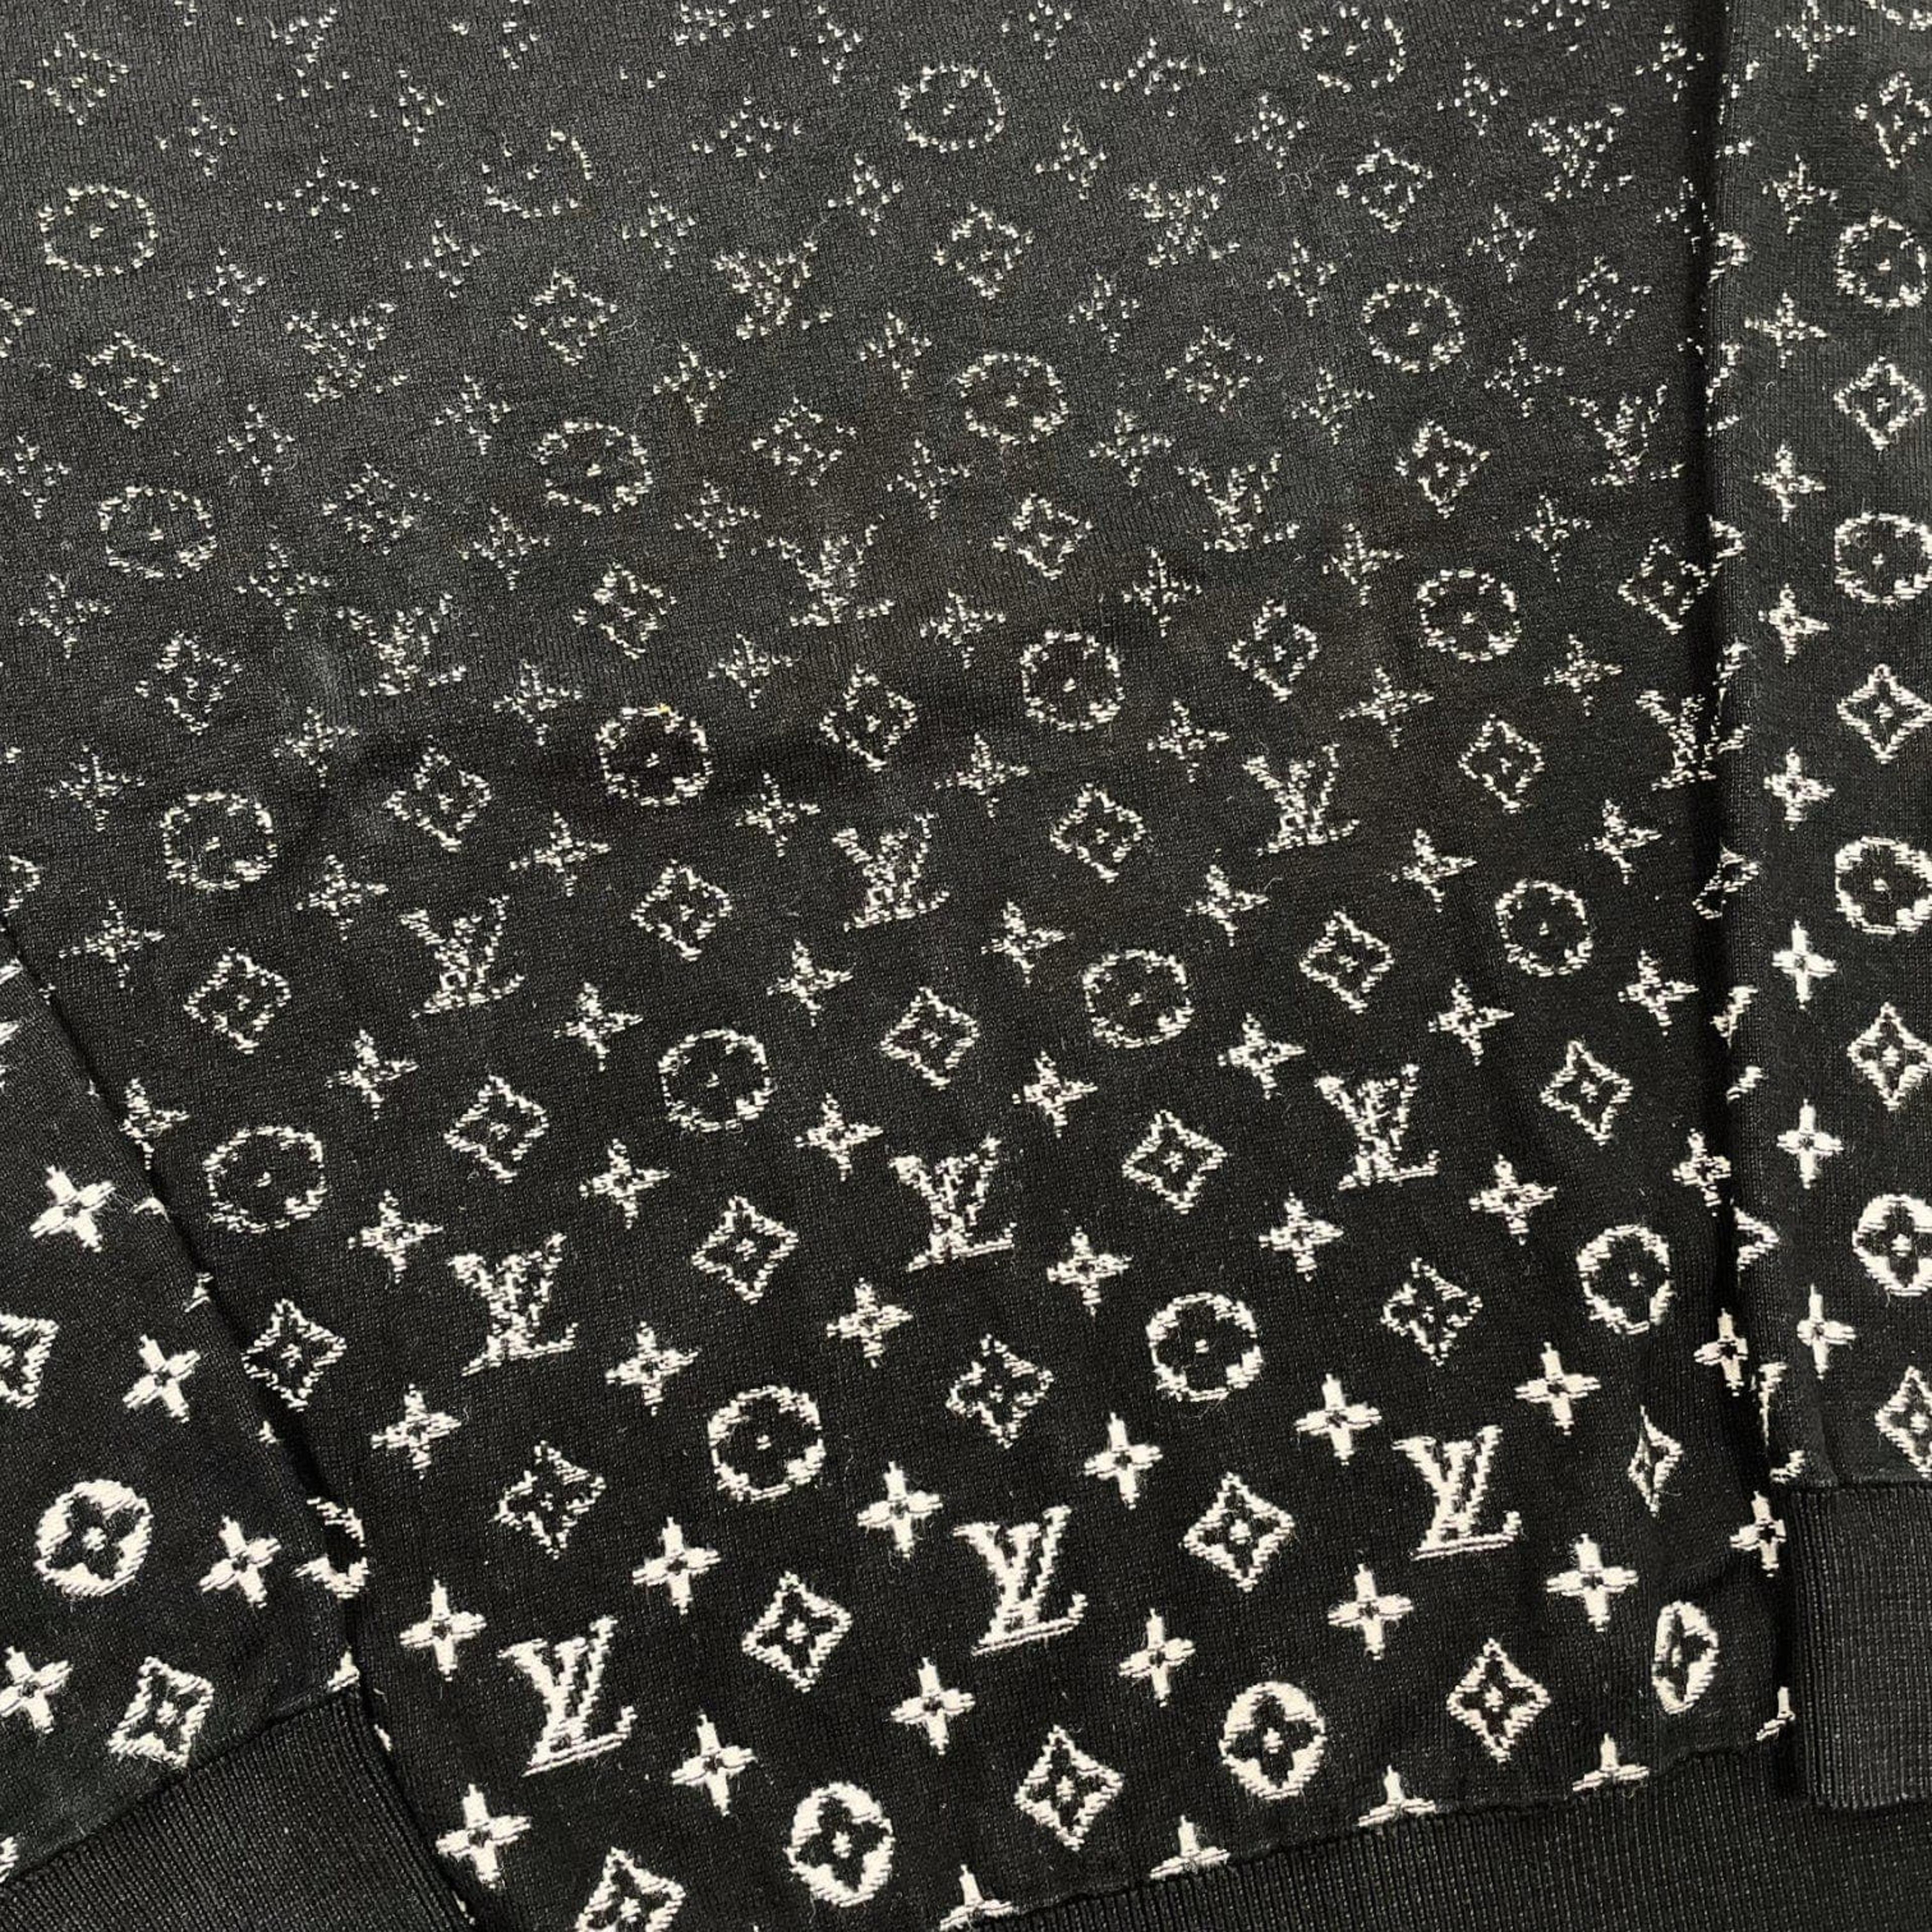 Alternate View 2 of Louis Vuitton Monogram Gradient Crewneck Sweatshirt Black Pre-Ow